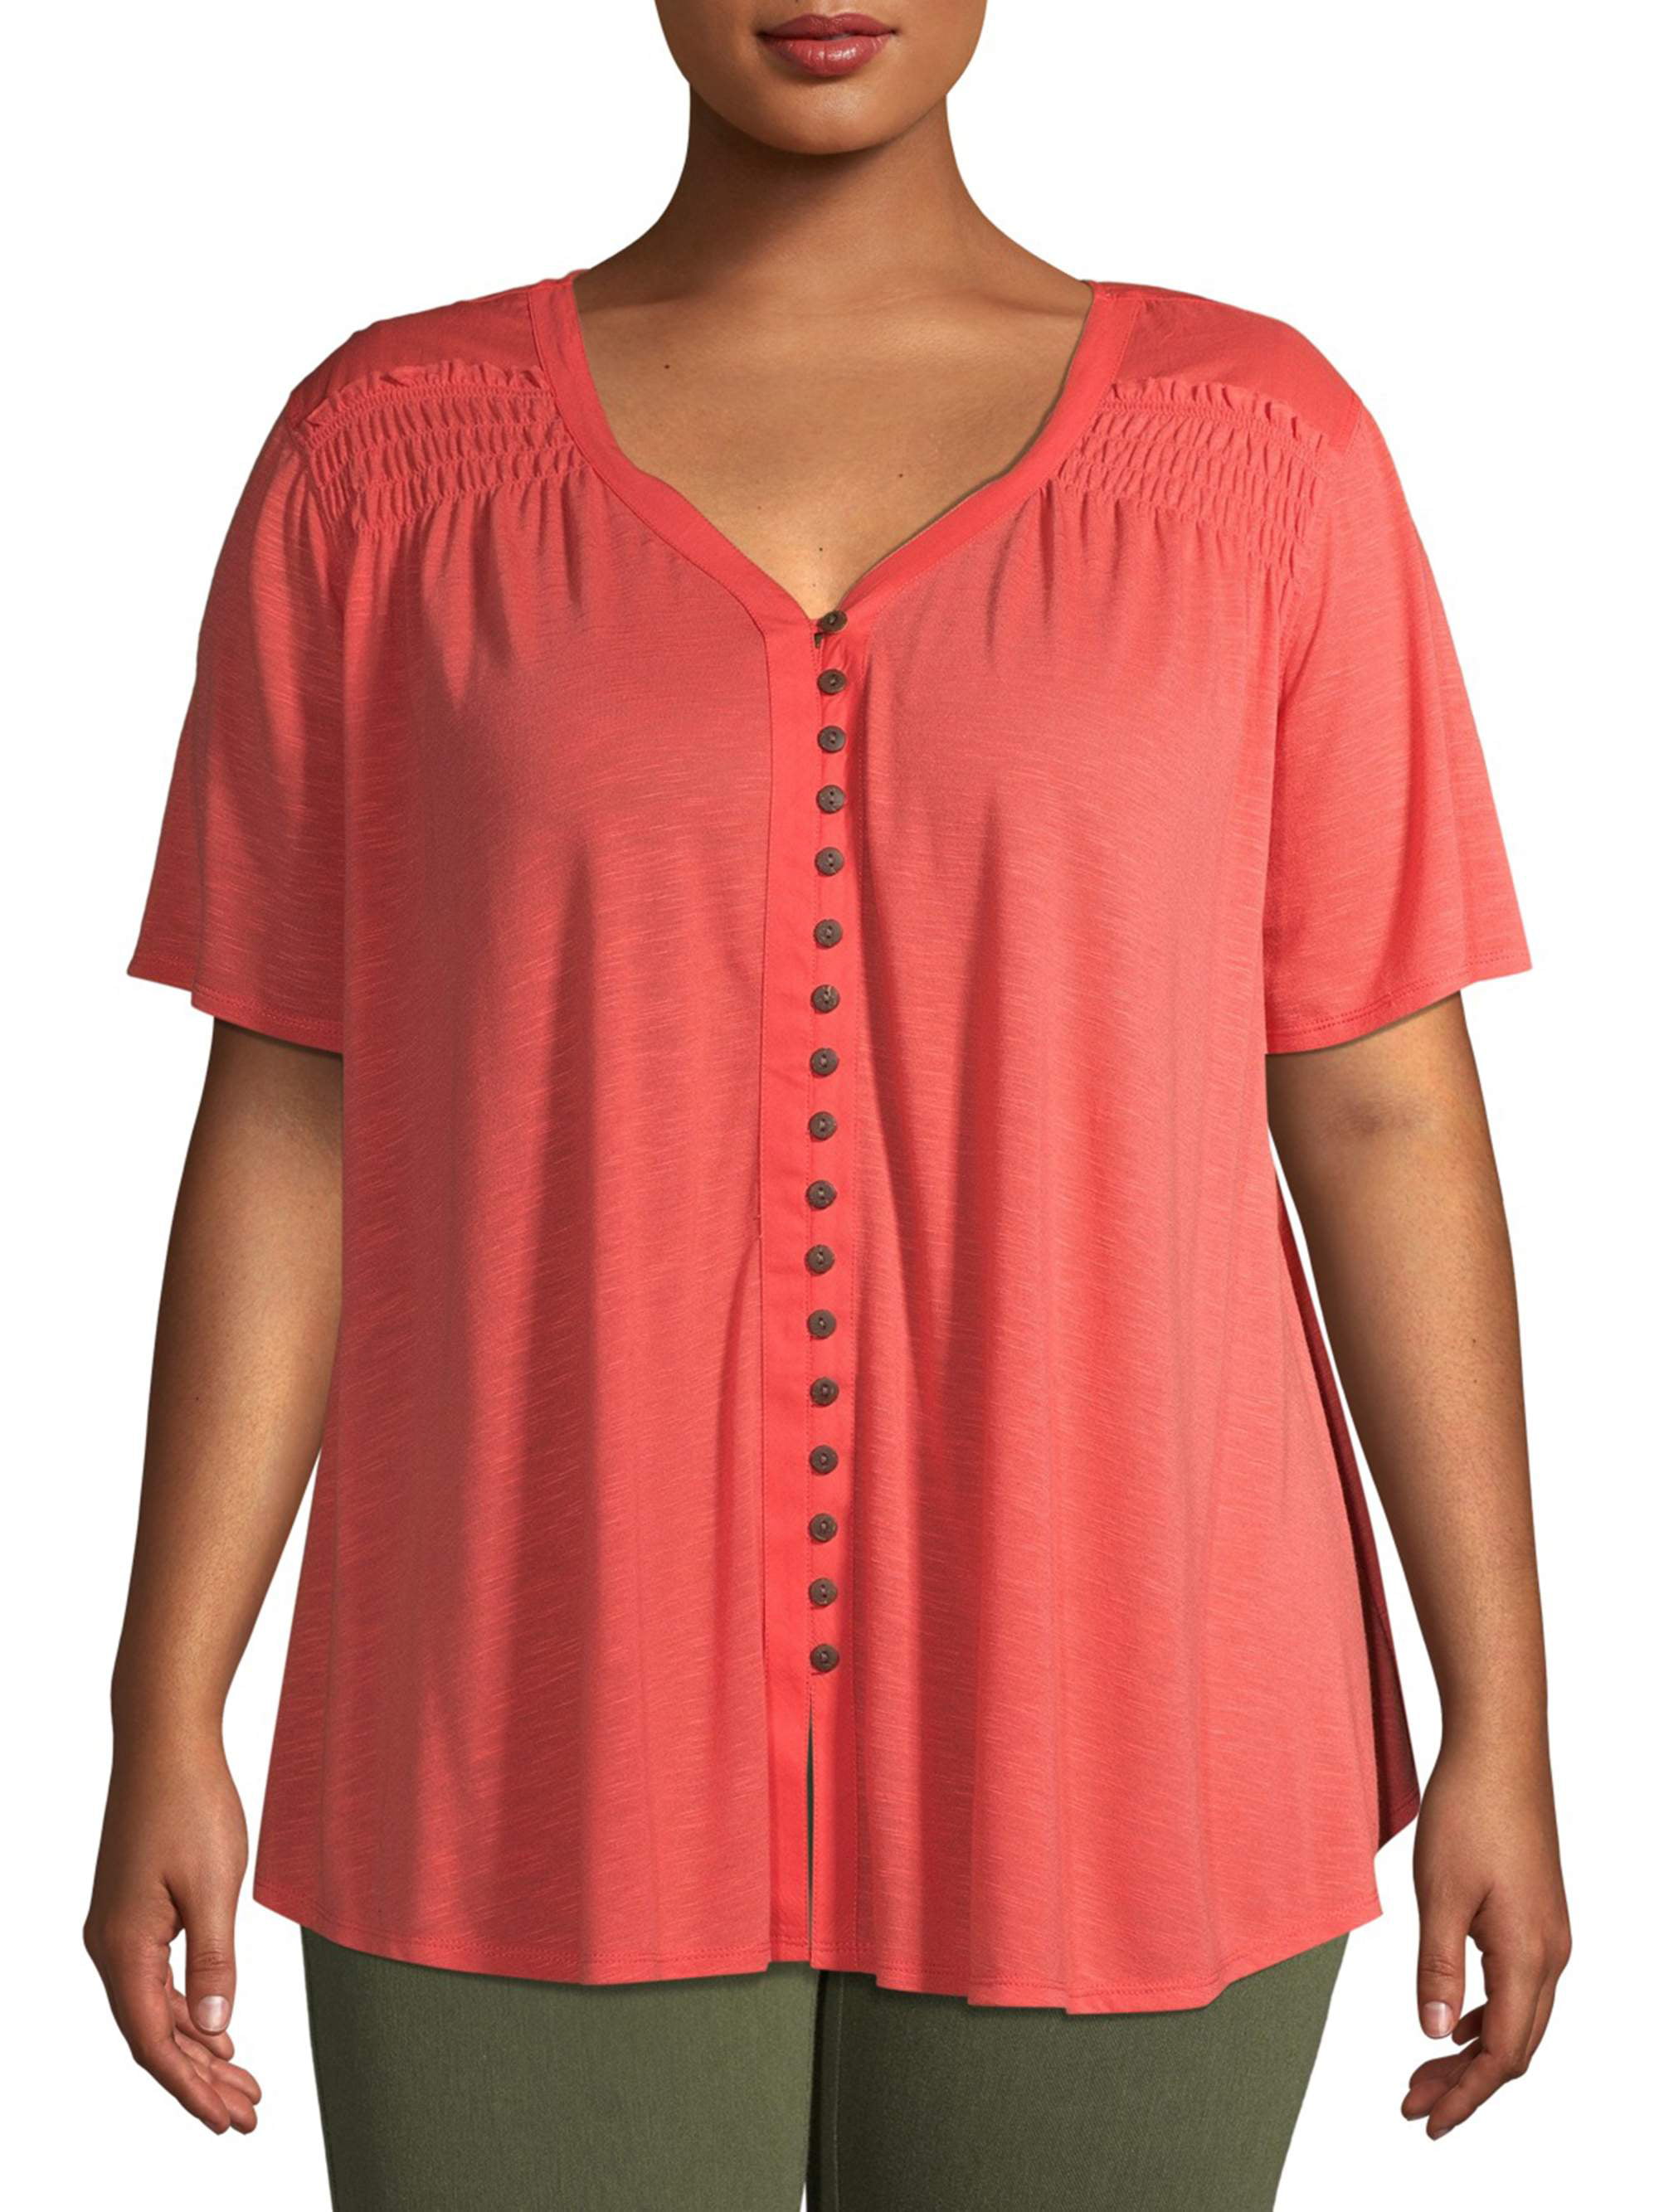 Terra & Sky Women's Plus Size Button Front Tunic Top - Walmart.com